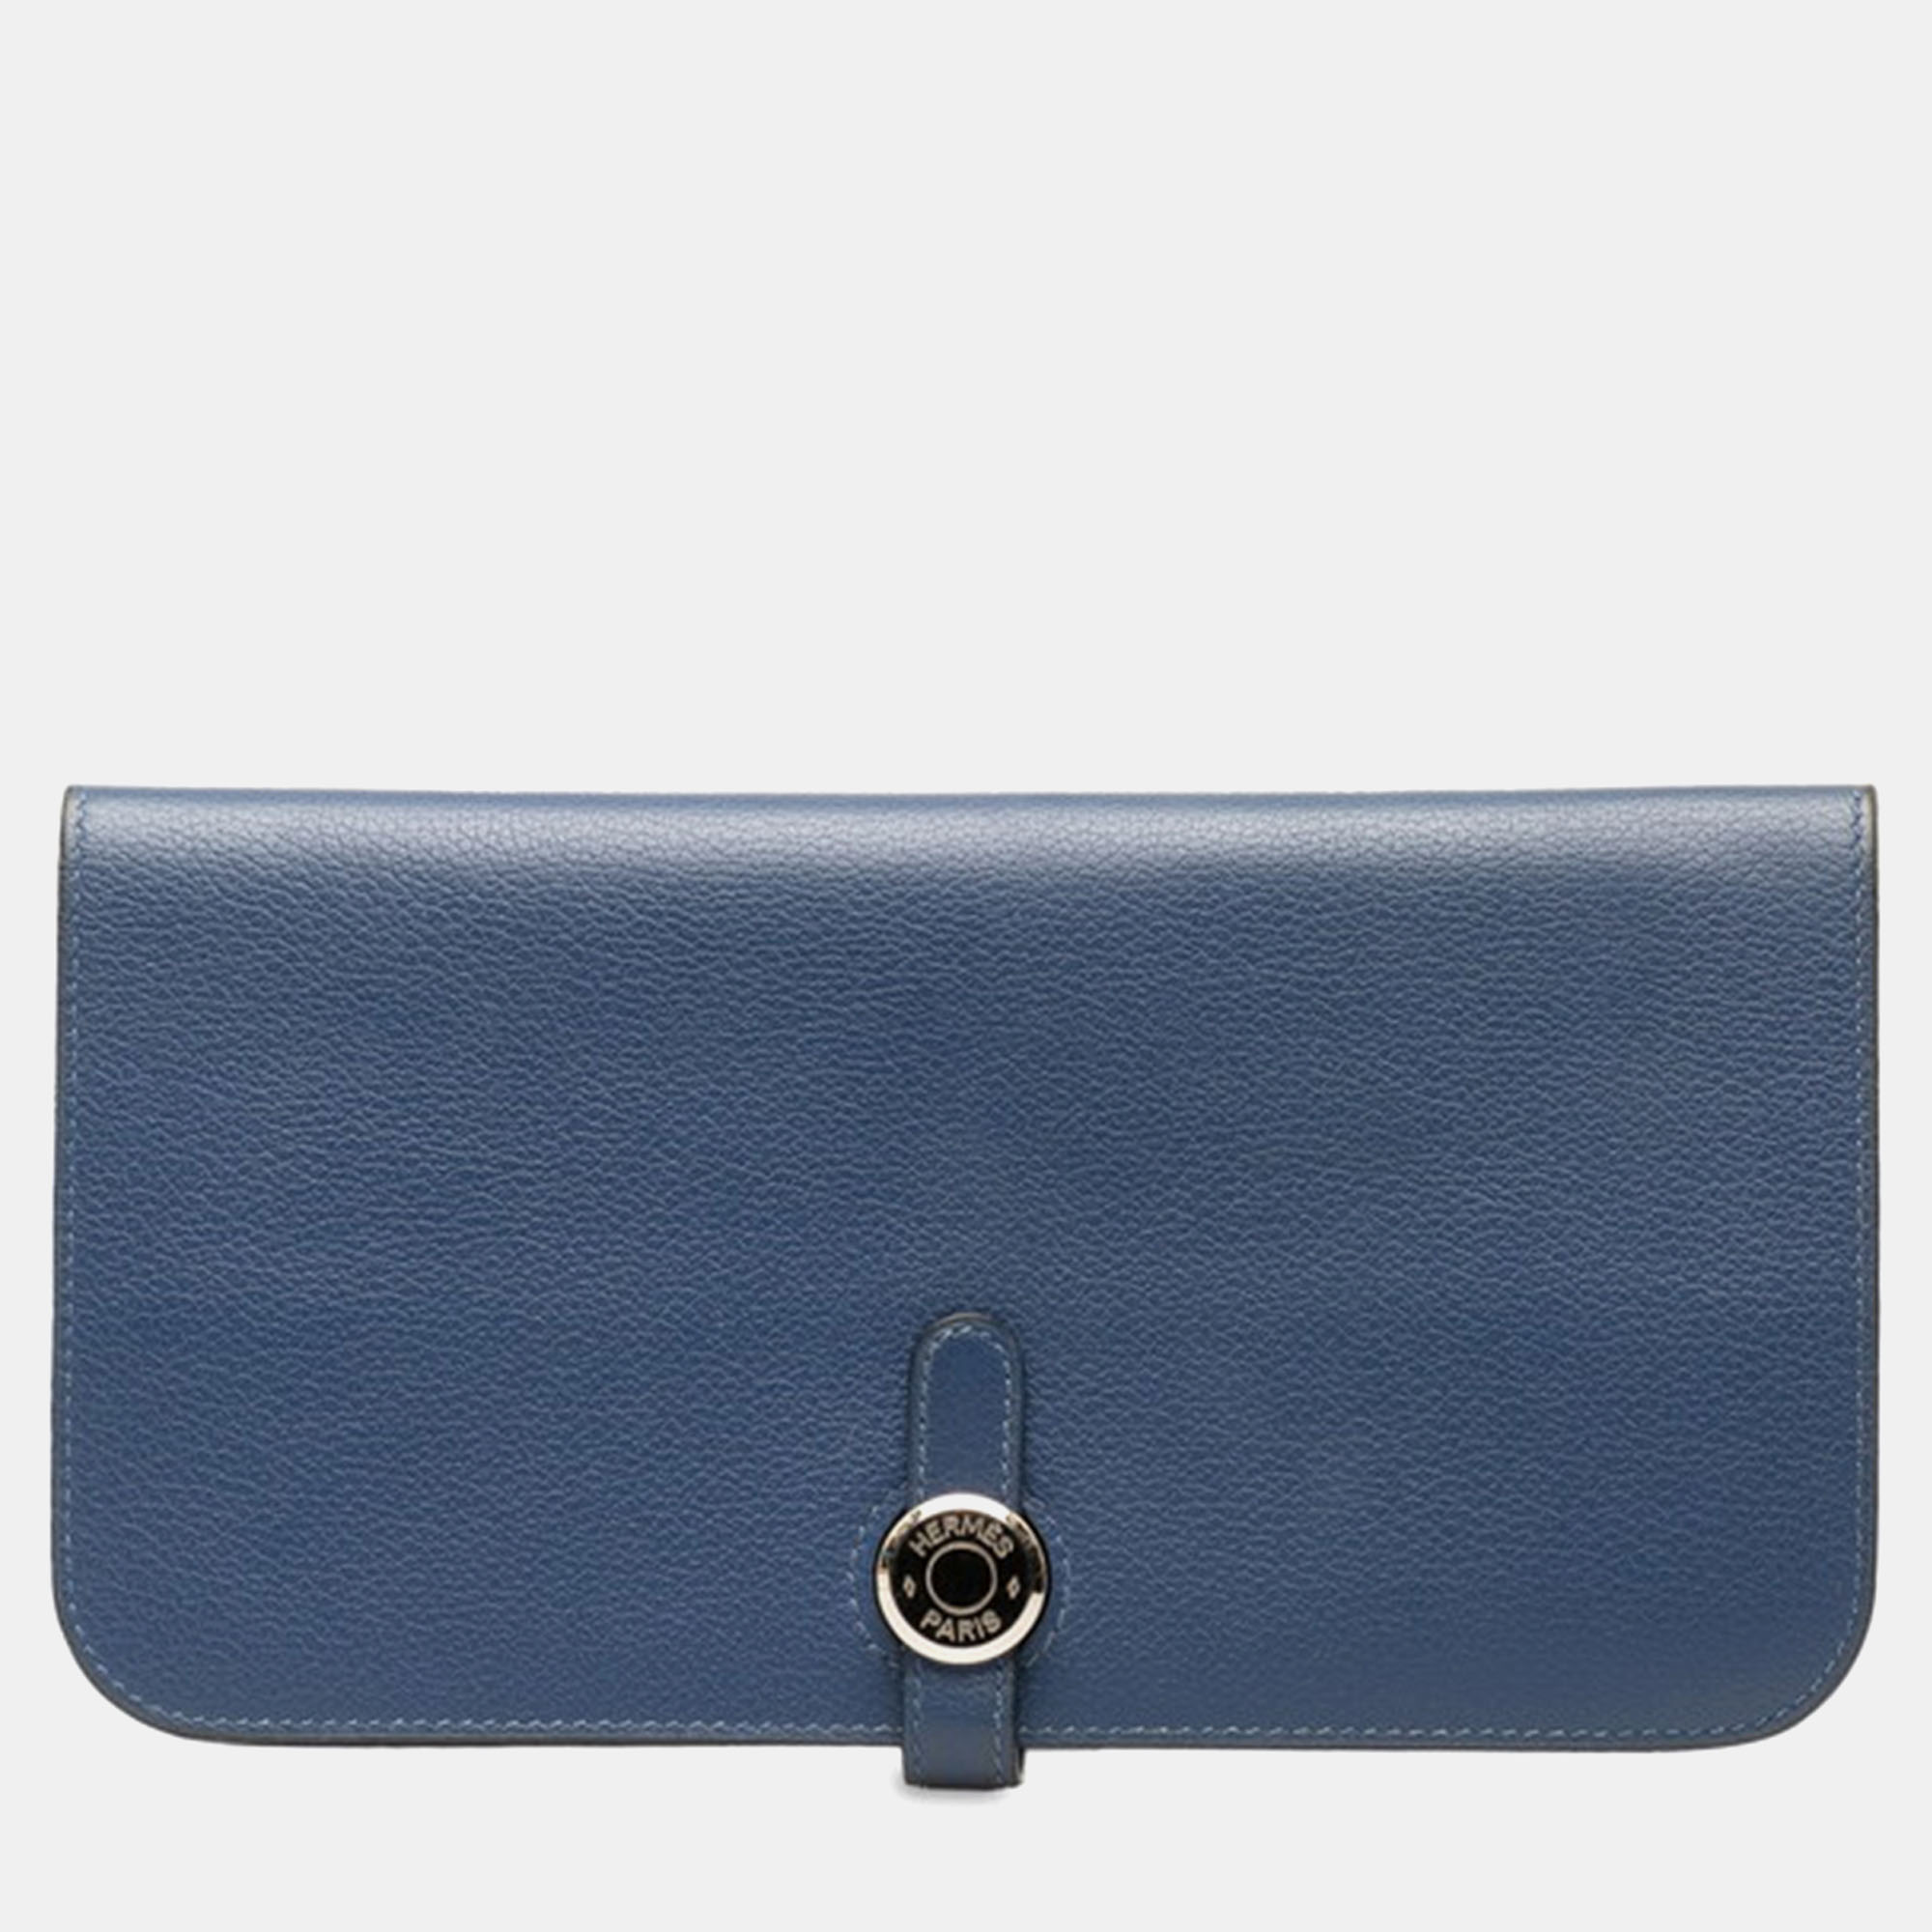 Hermes blue evercolor leather dogon wallet